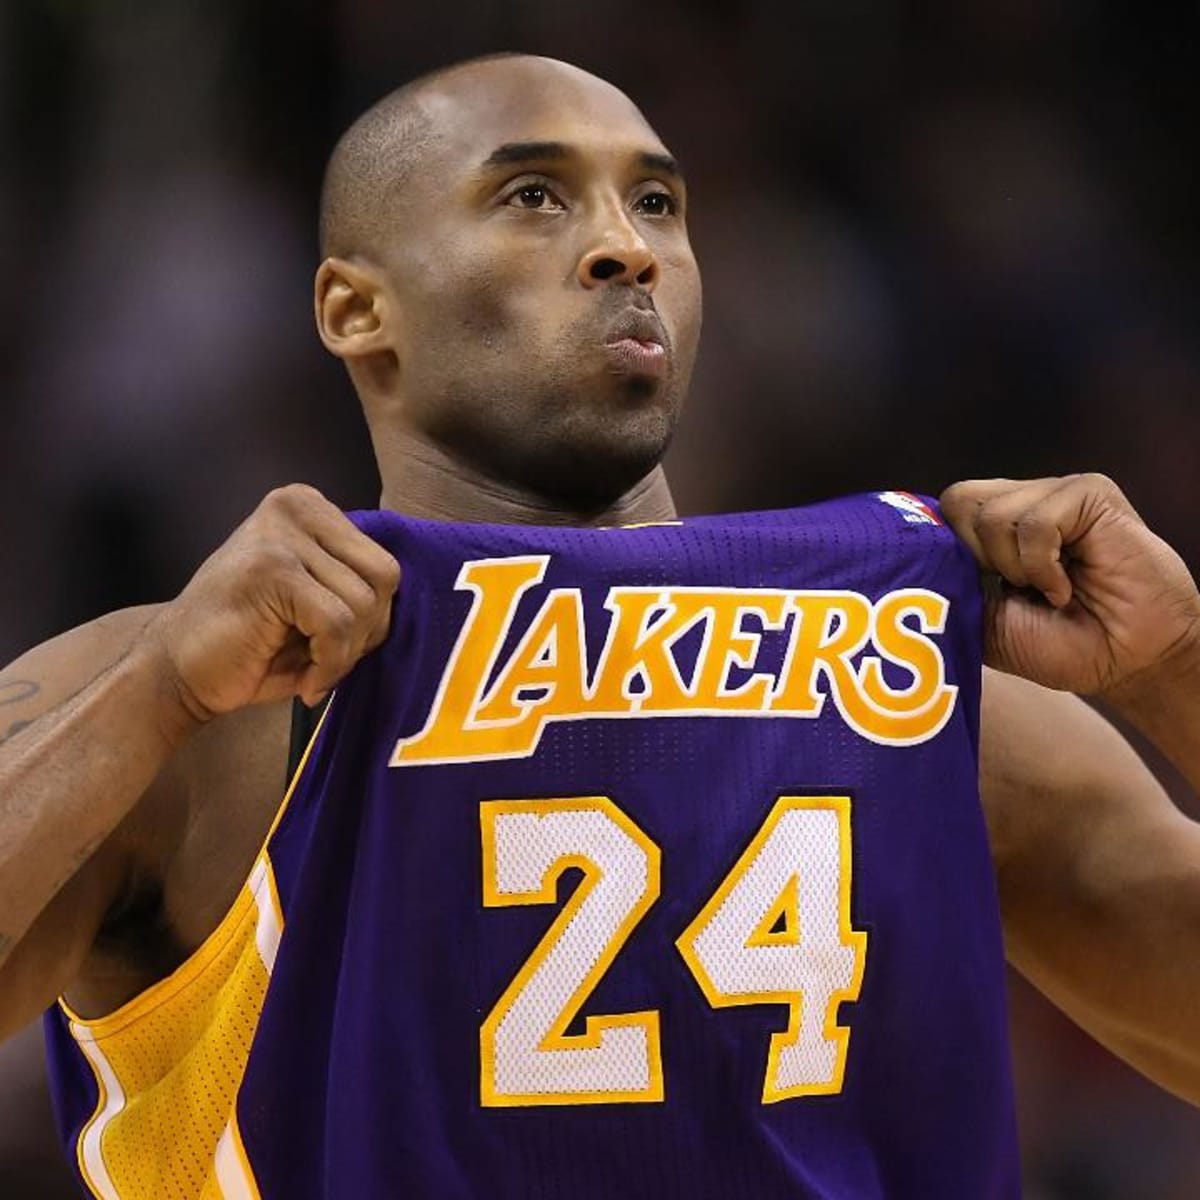 How many rings has Kobe Bryant won?